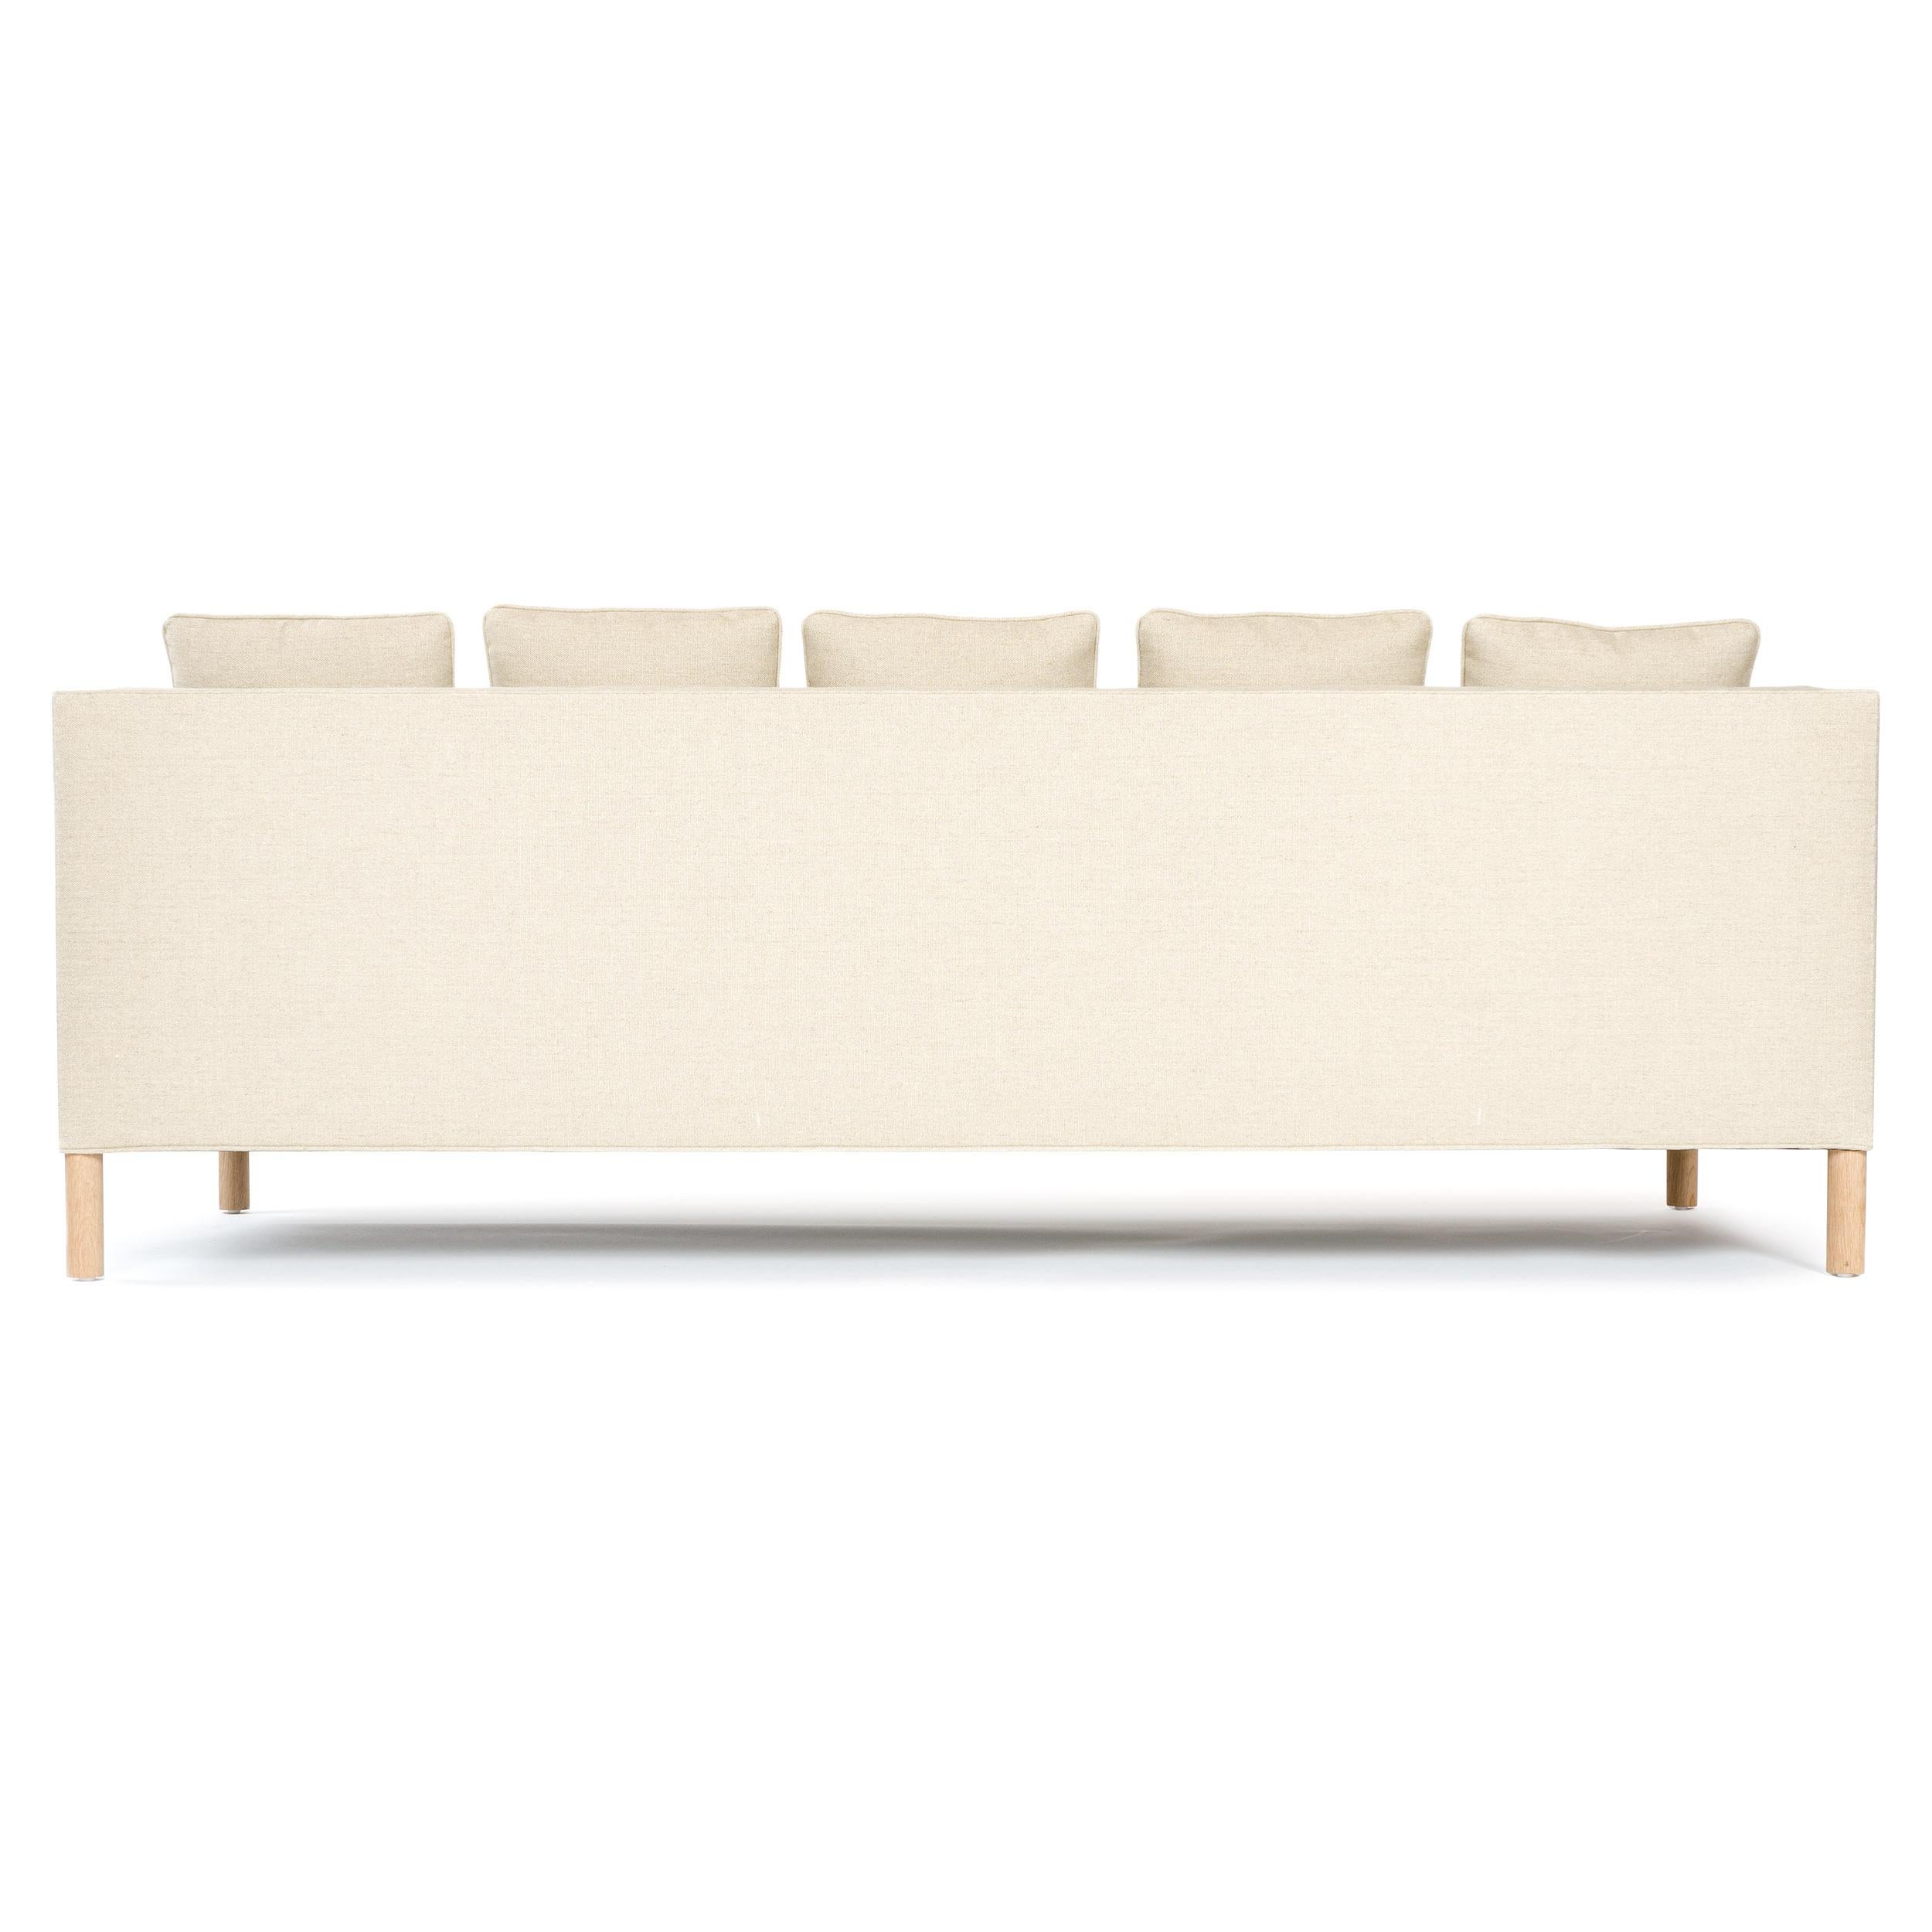 Upholstery the City Sofa, a WYETH Original